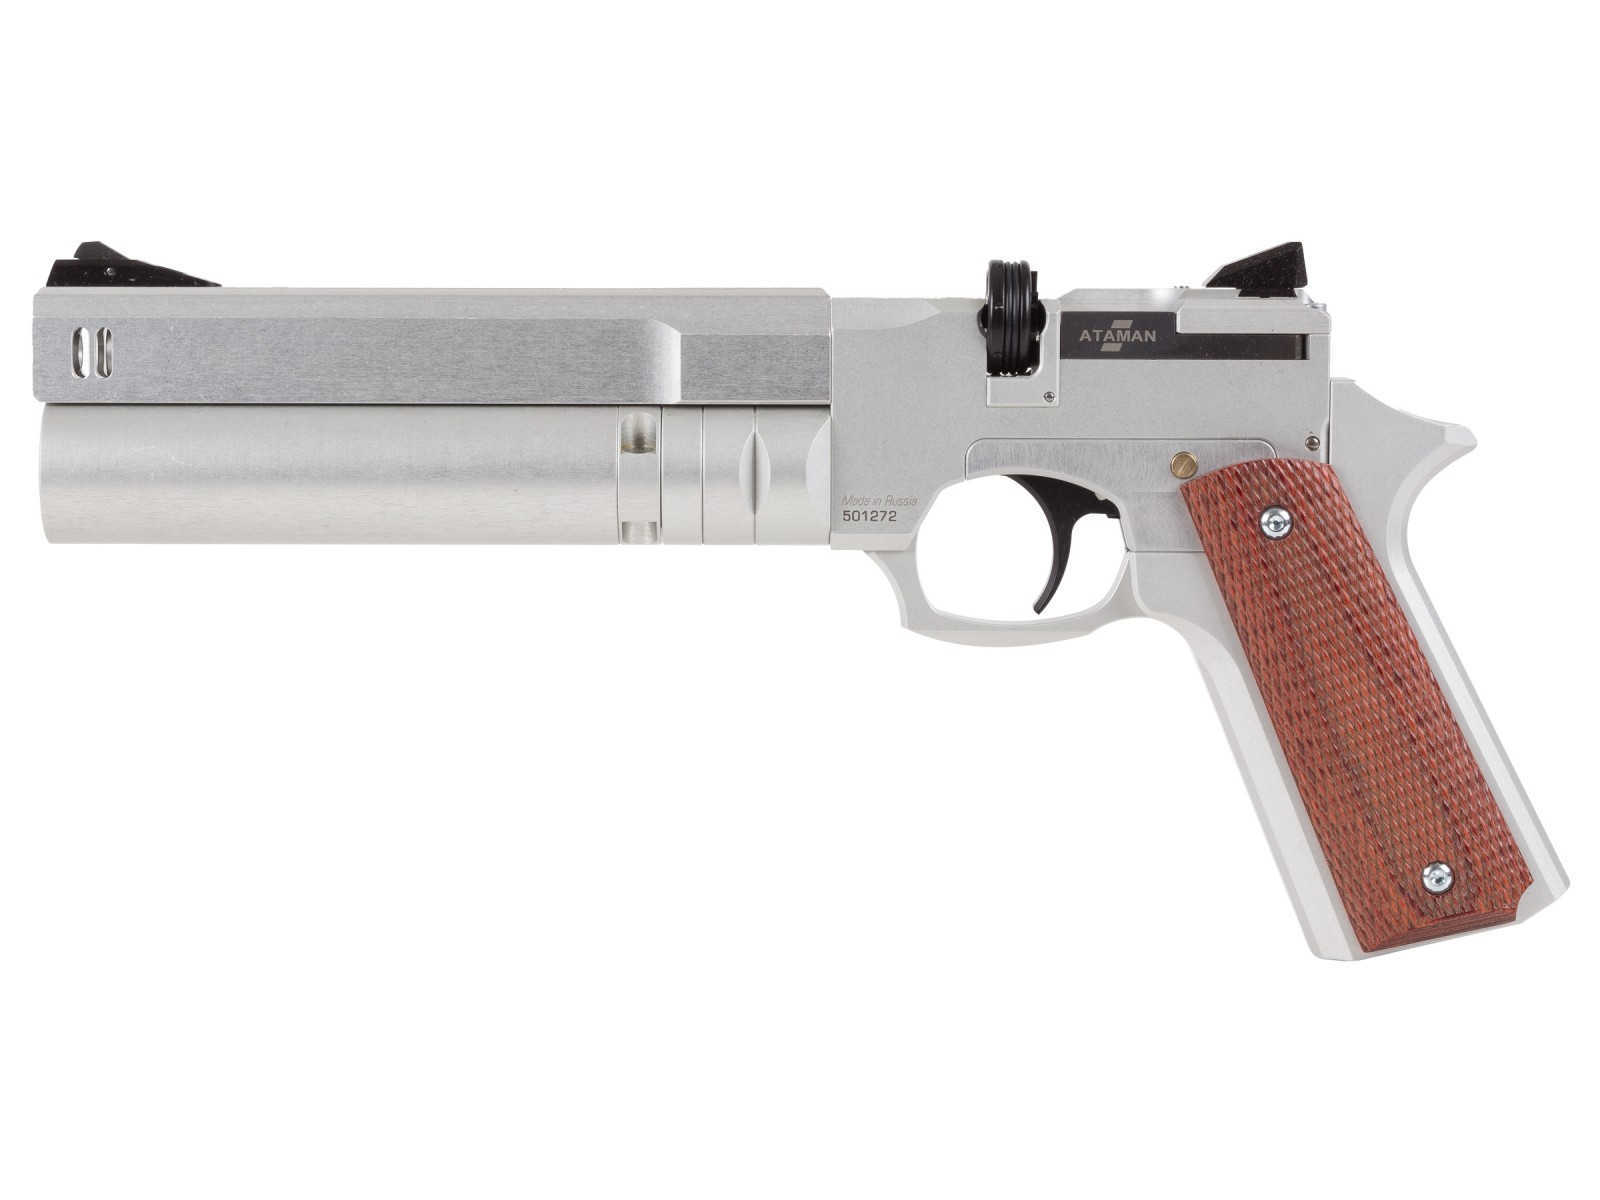 Ataman AP16 Pellet Pistol, Silver